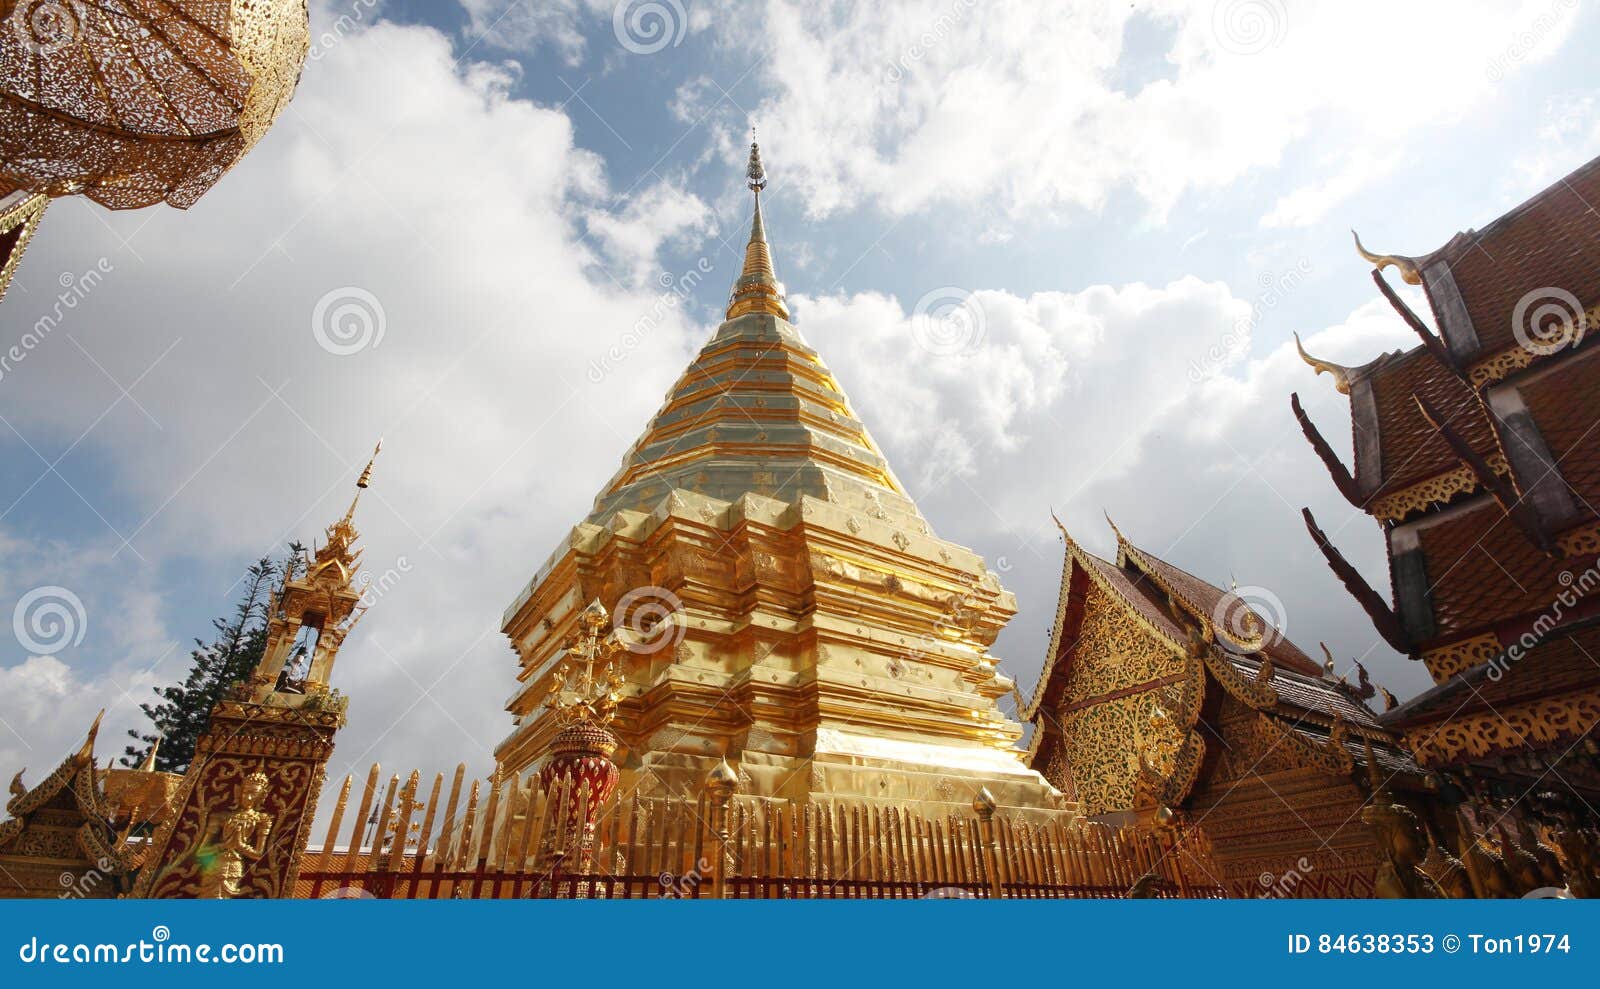 the gold pagoda